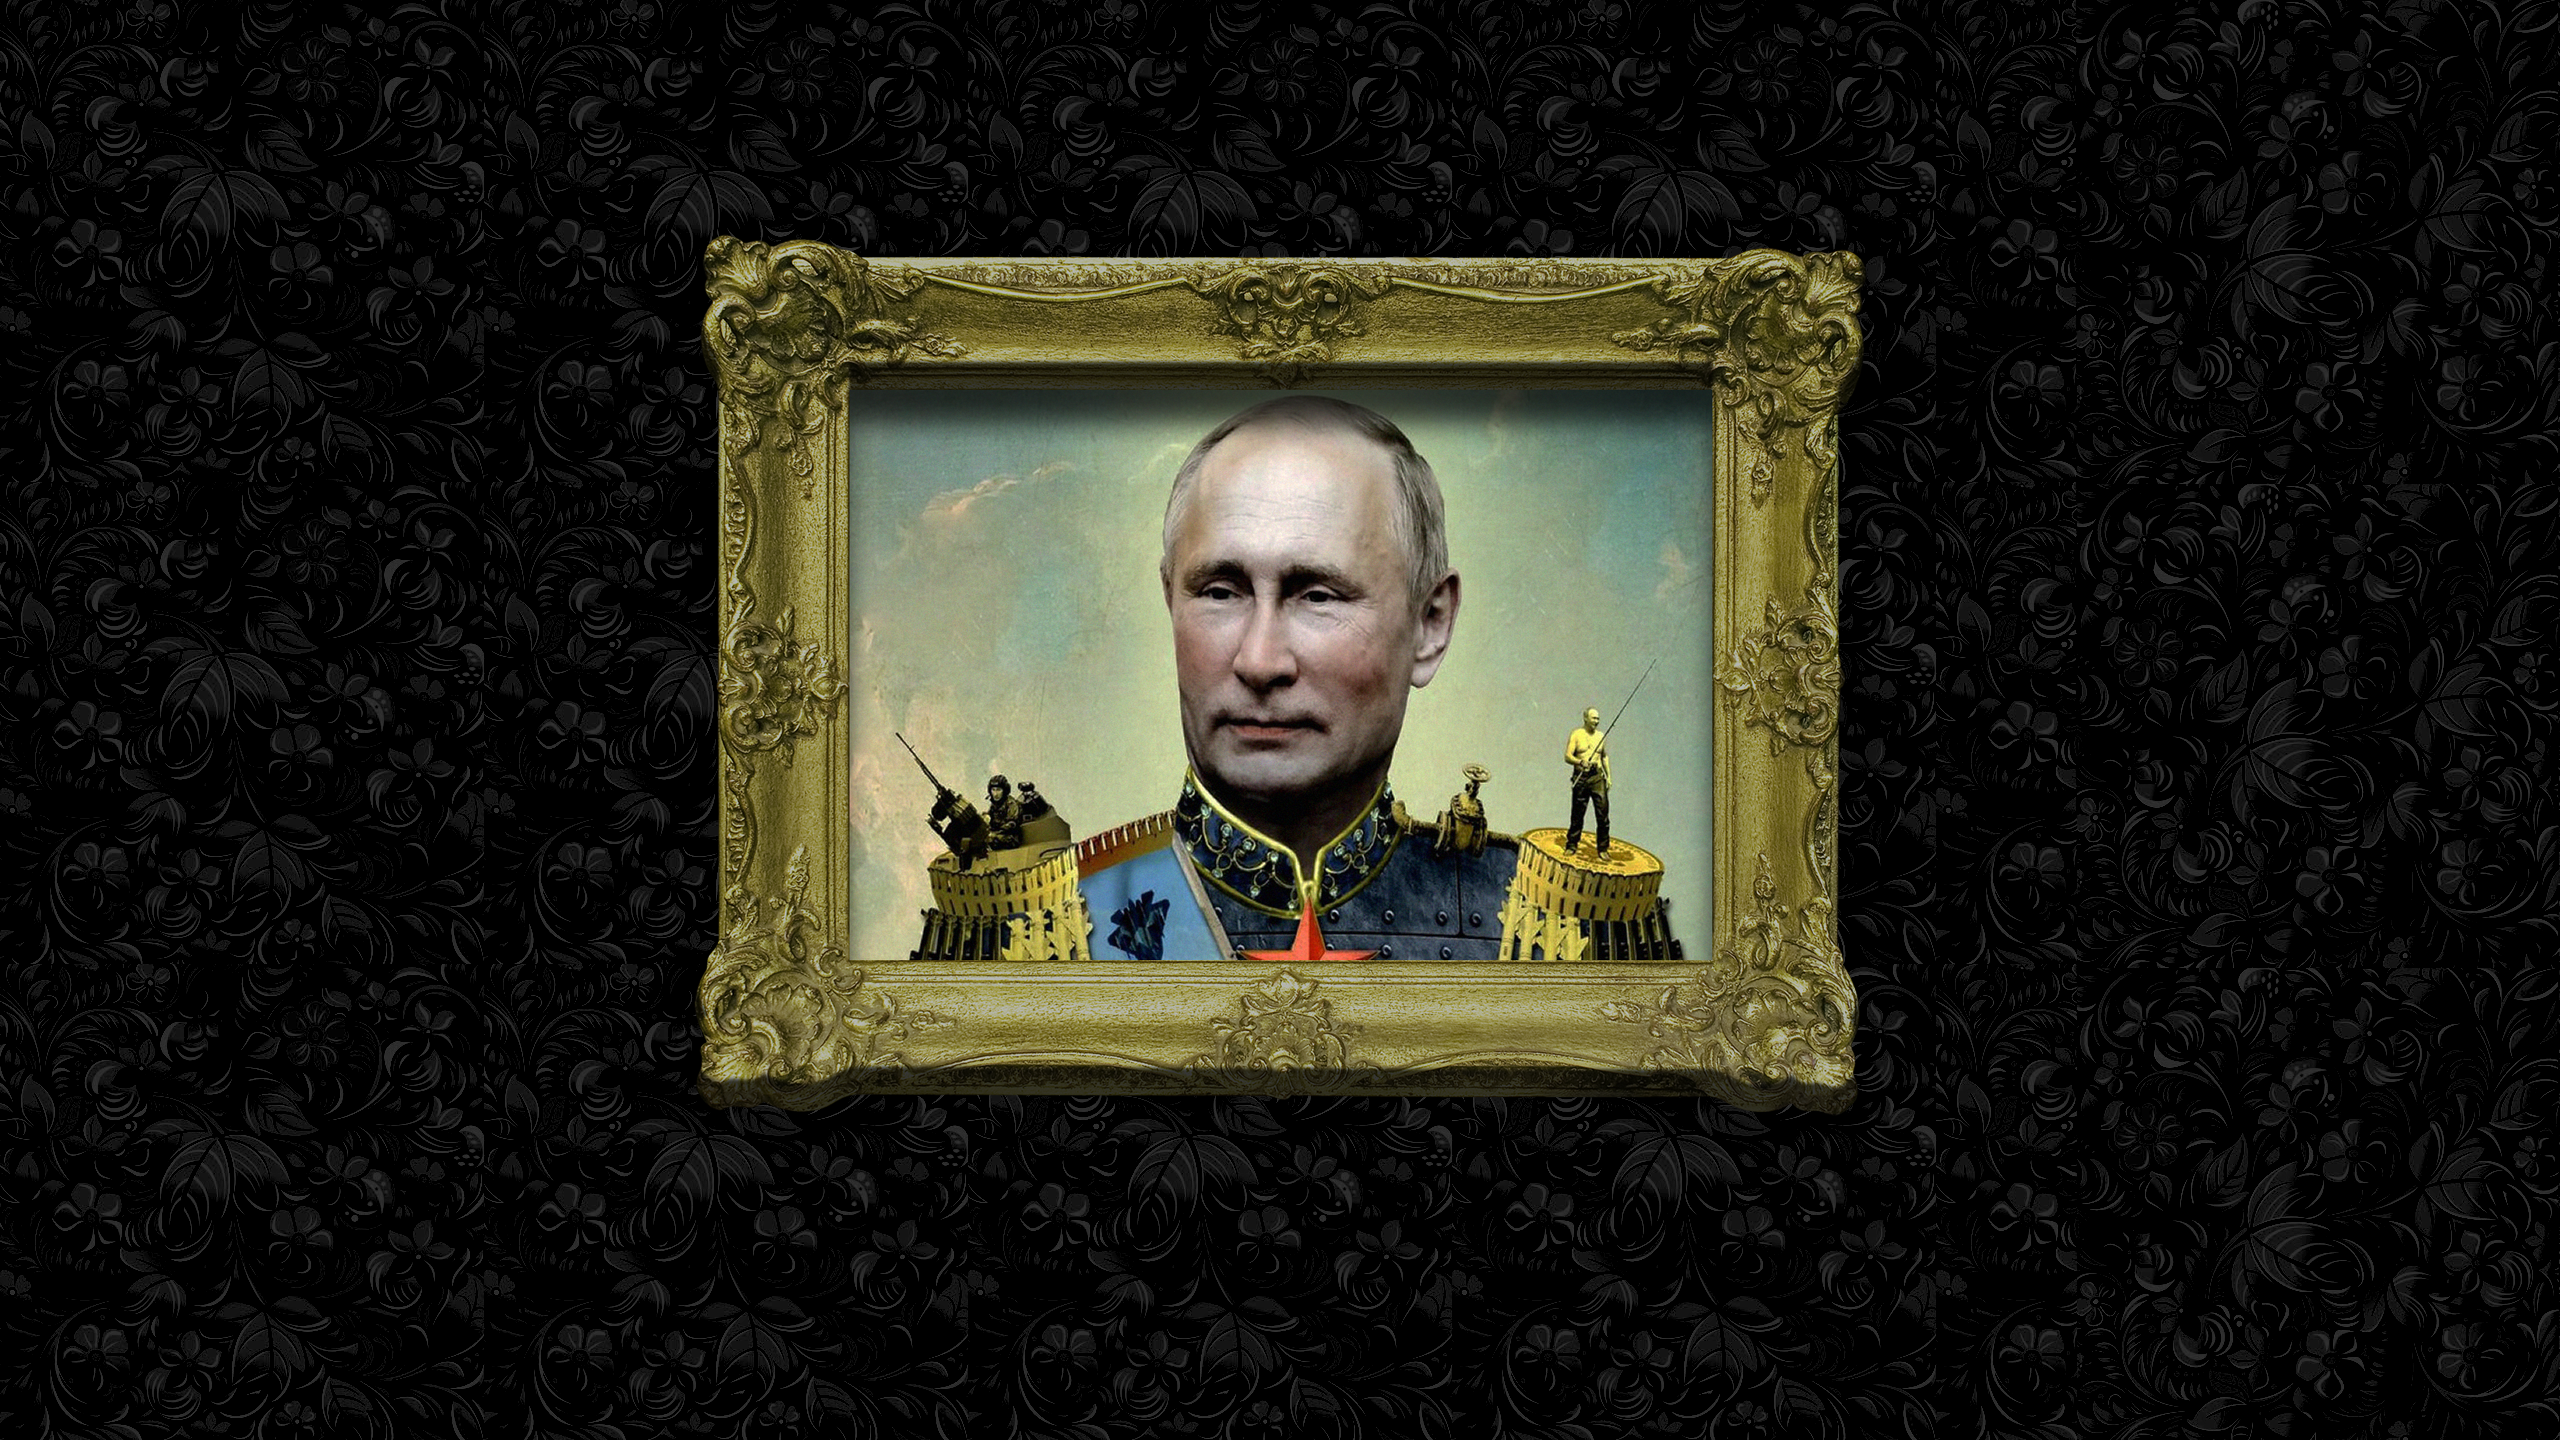 People 2560x1440 Vladimir Putin black background Russia presidents Baroque KGB politics humor propaganda dictators